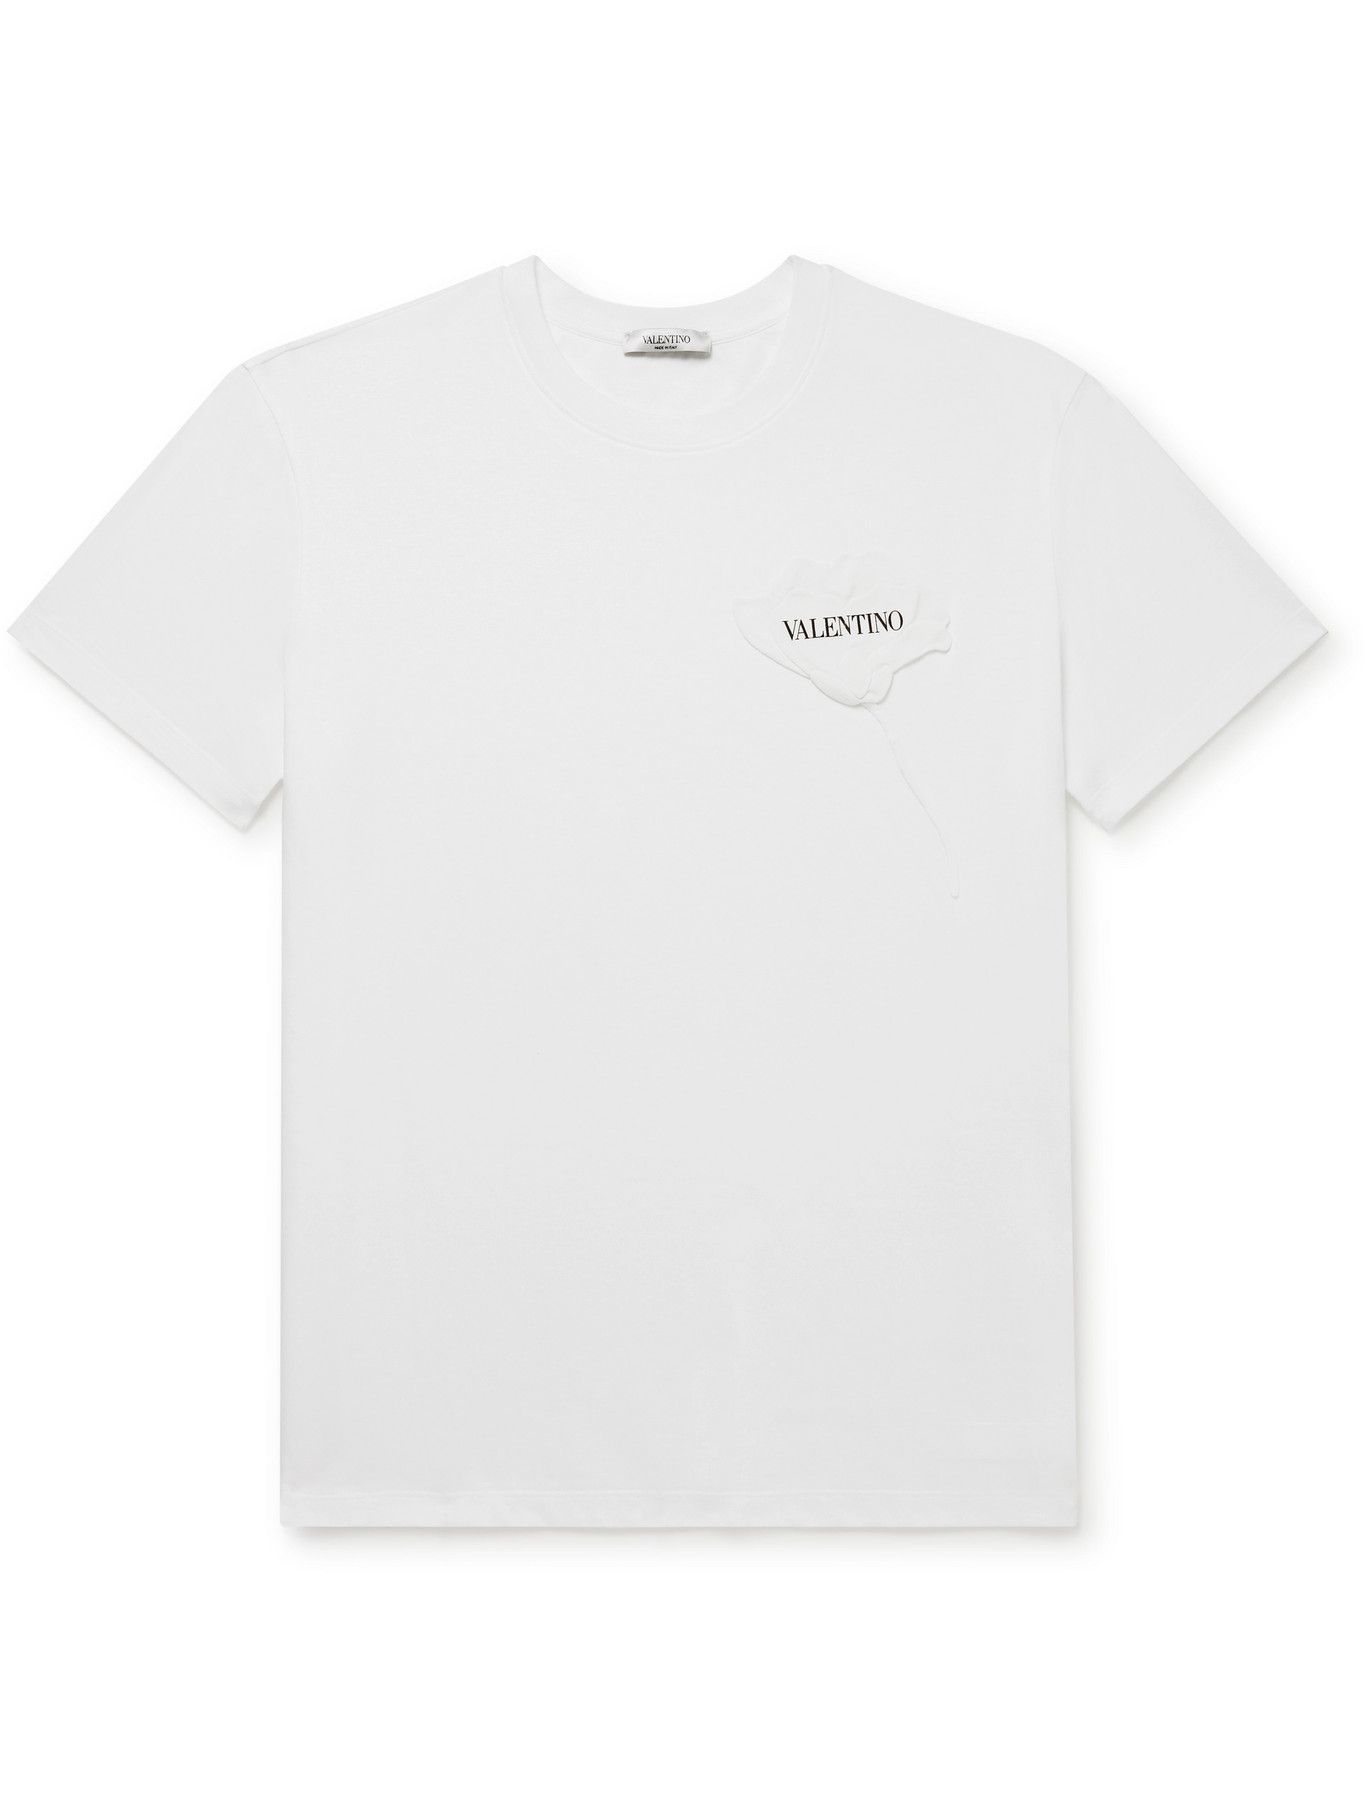 VALENTINO - Logo-Appliquéd Cotton-Jersey T-Shirt - White Valentino